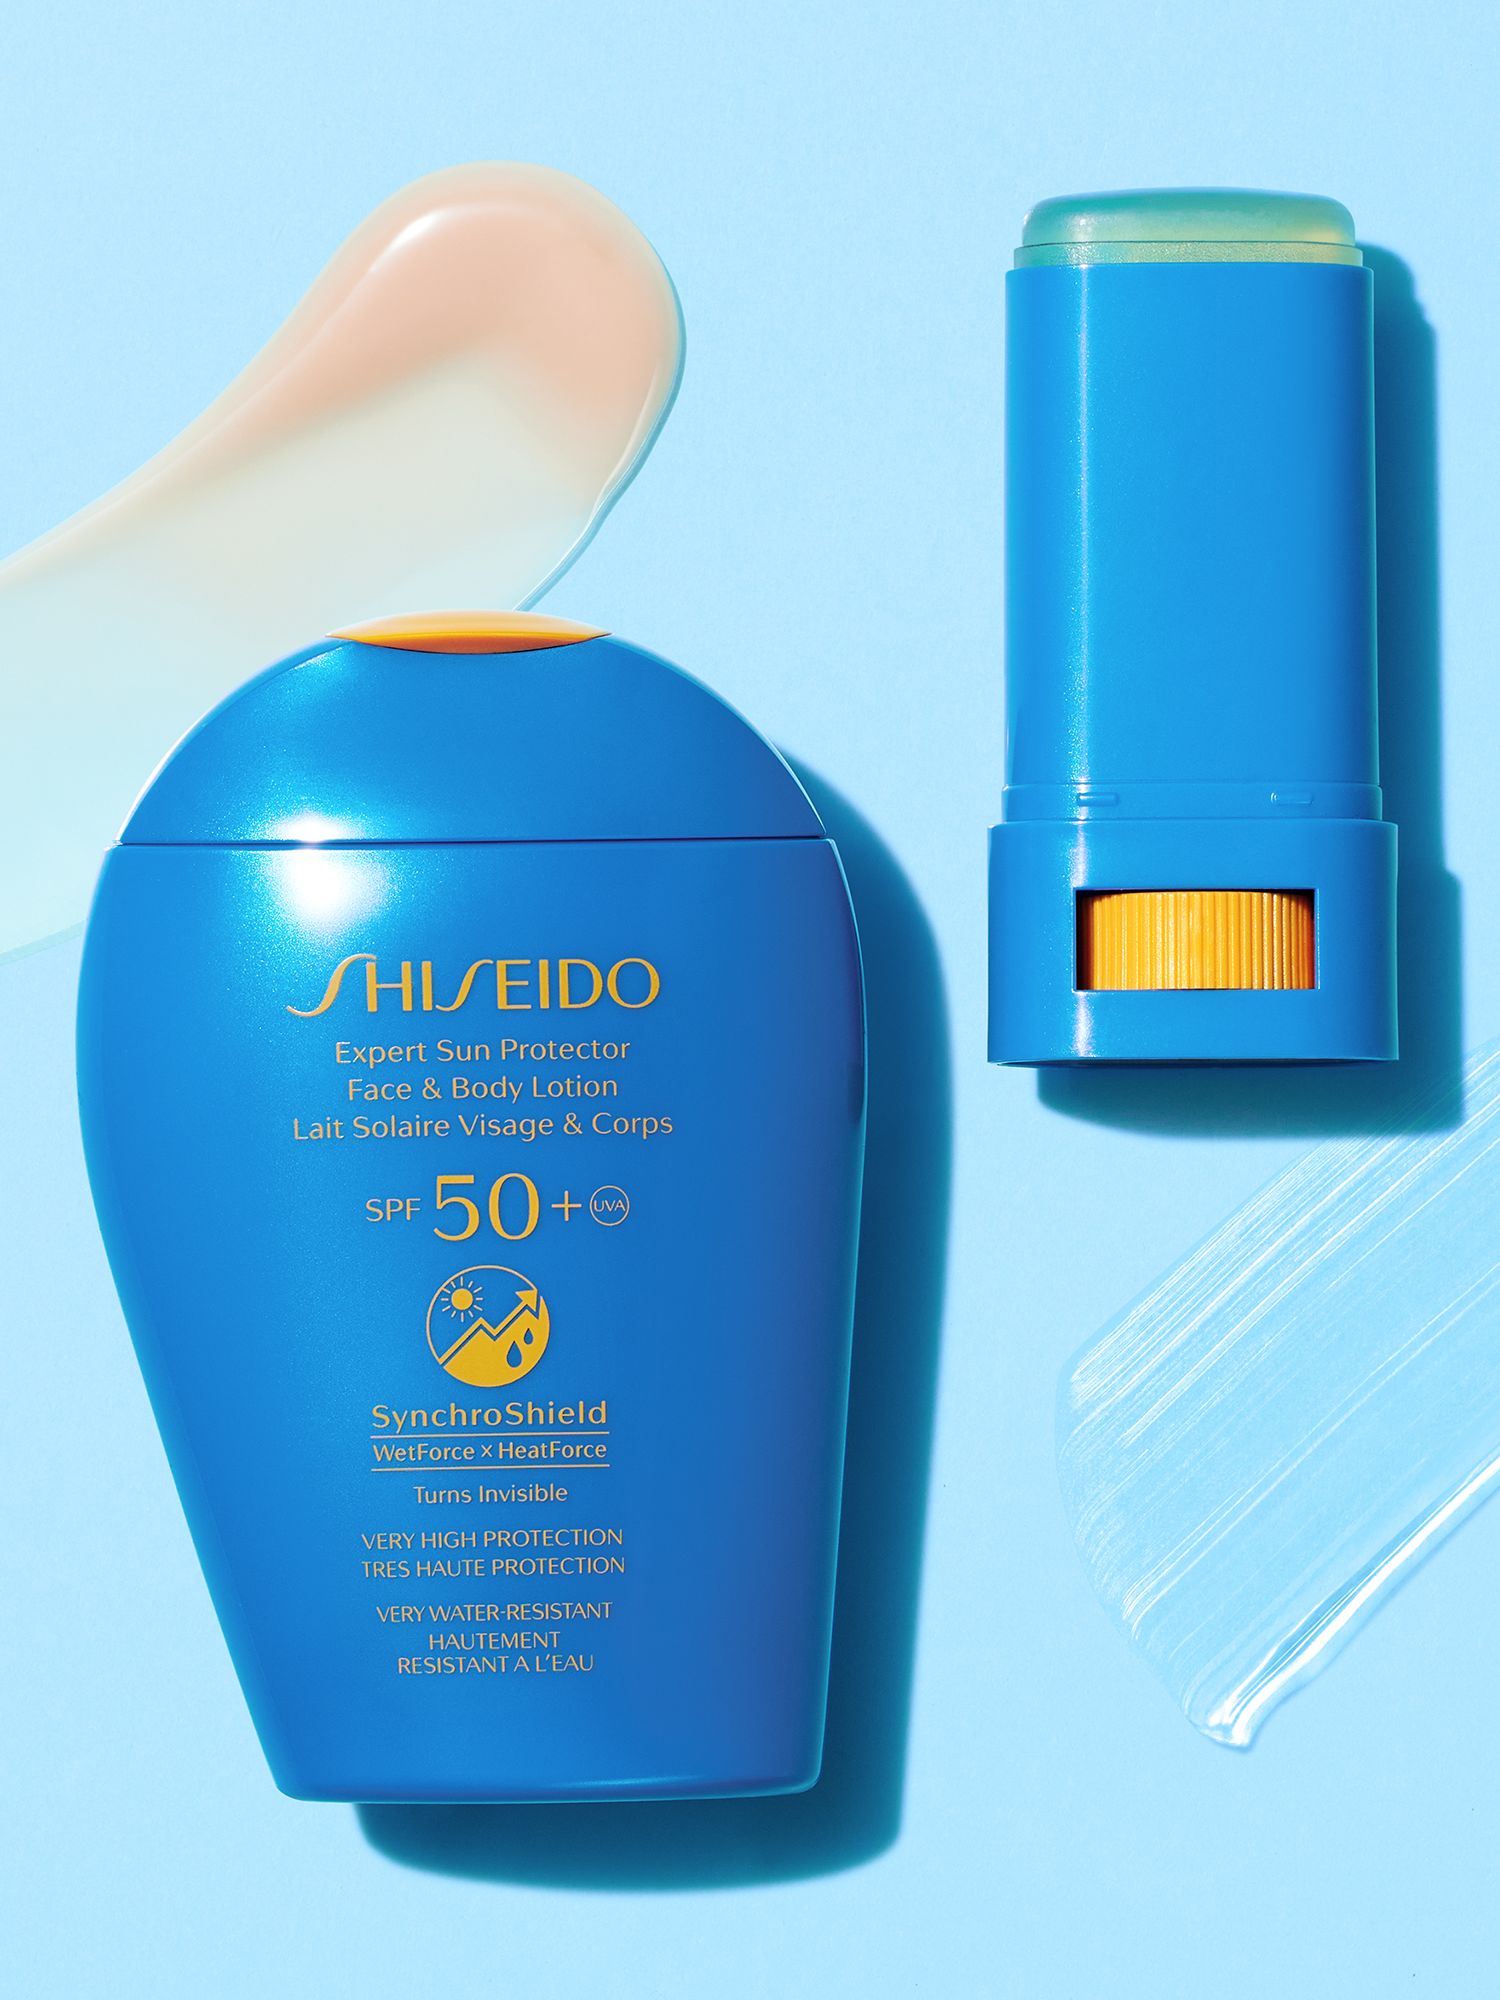 Shiseido Clear Suncare Stick SPF 50+, 20g 7